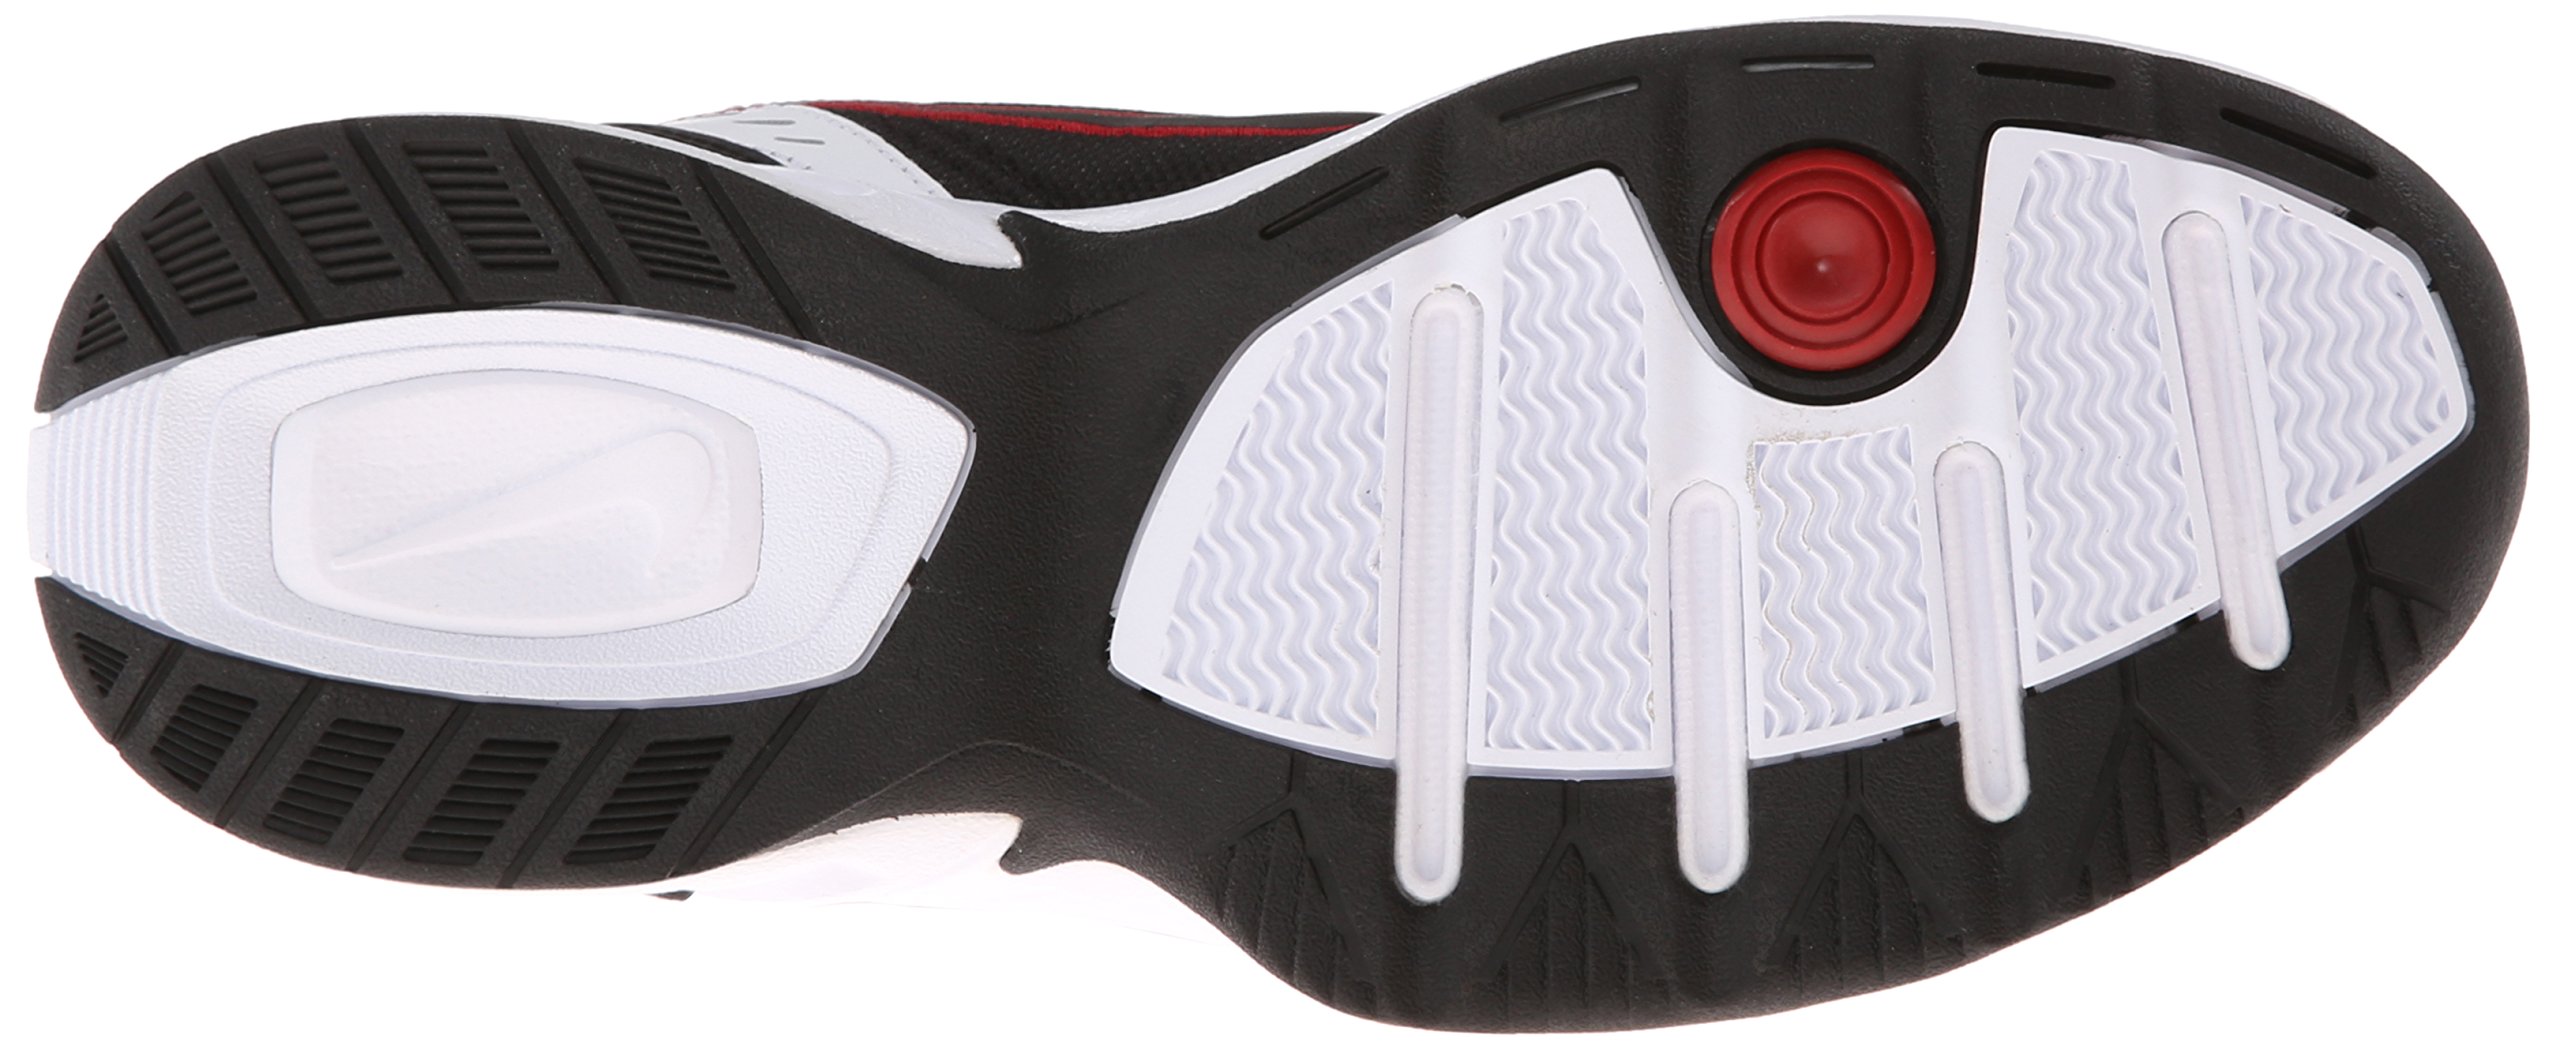 Nike 415445-101: Men's Air Monarch IV Cross Trainer Sneaker (10 D(M) US) - image 2 of 8